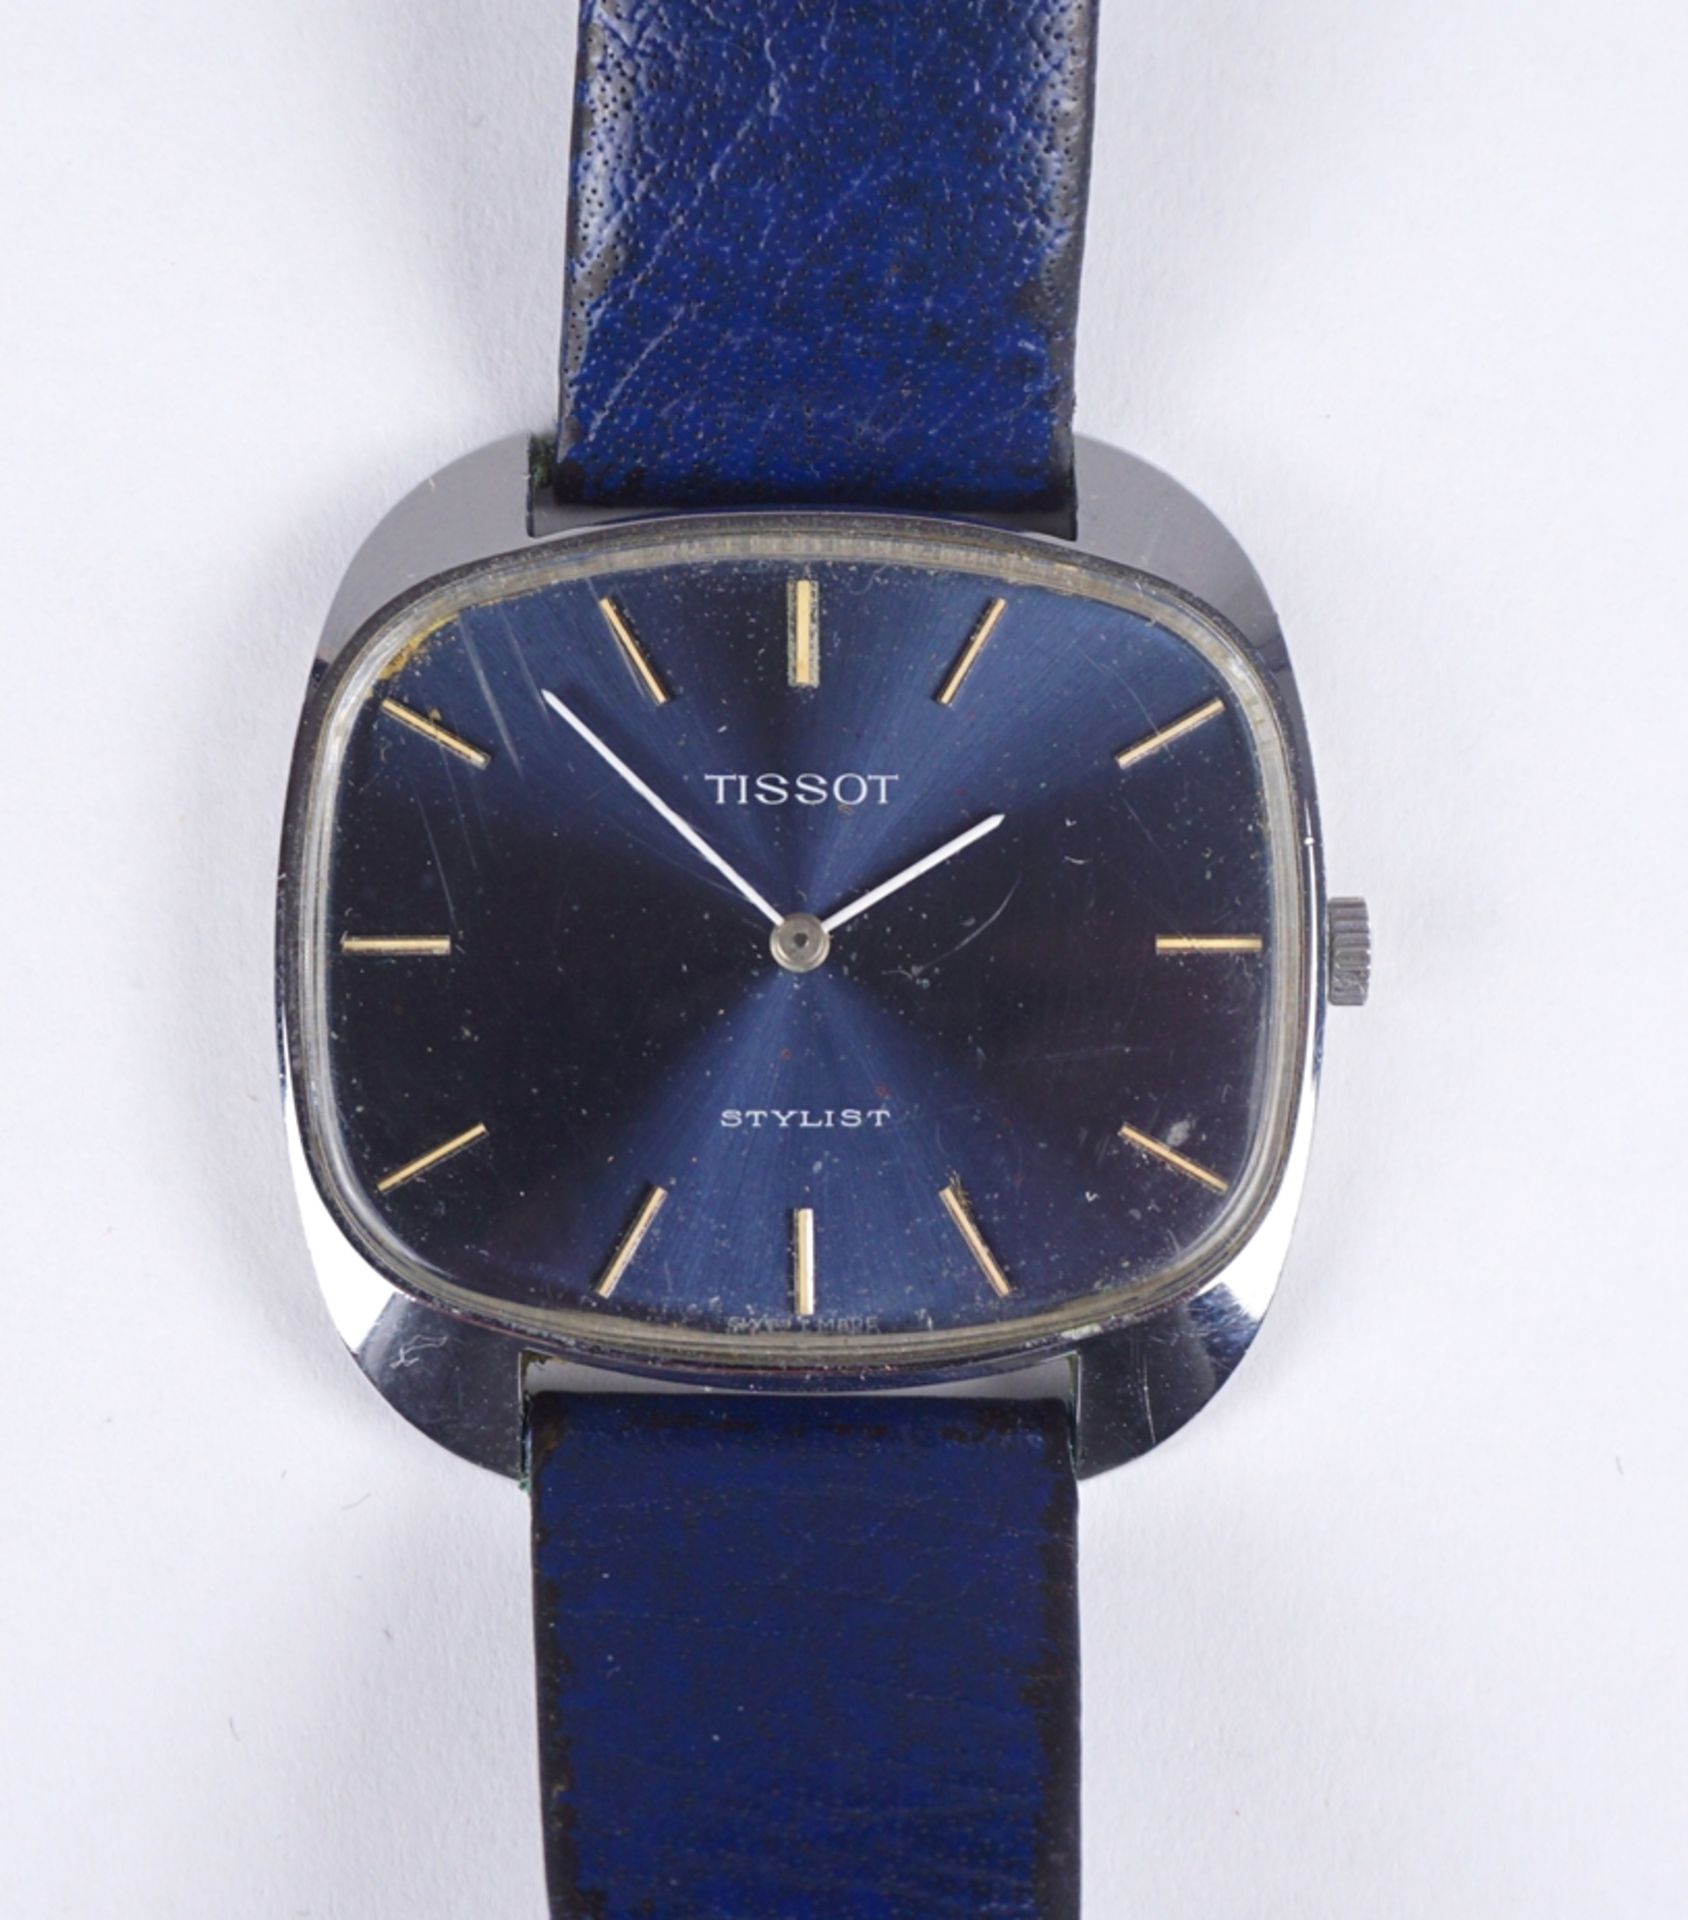 Armbanduhr Tissot Stylist, Kal. 2141, 1970er Jahre - Image 2 of 3